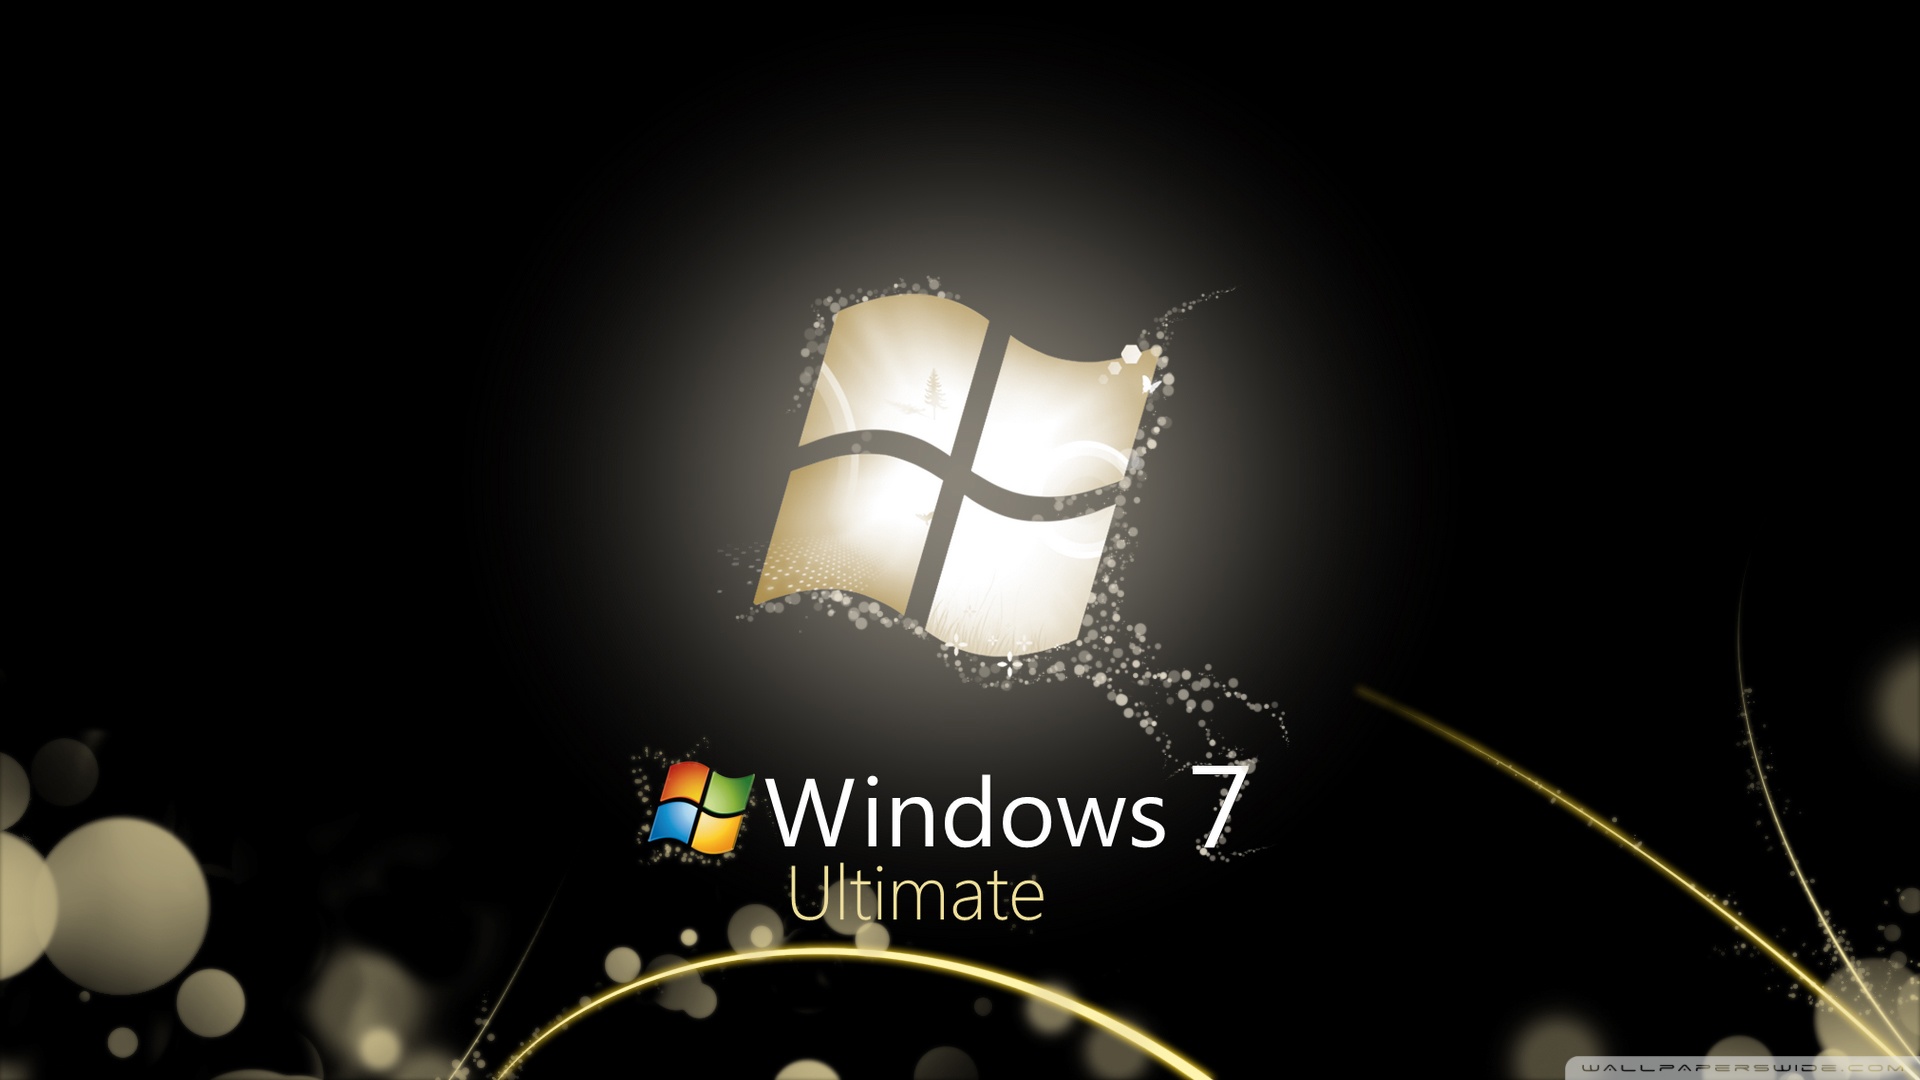 Windows 7 Ultimate Bright Black HD desktop wallpaper Widescreen